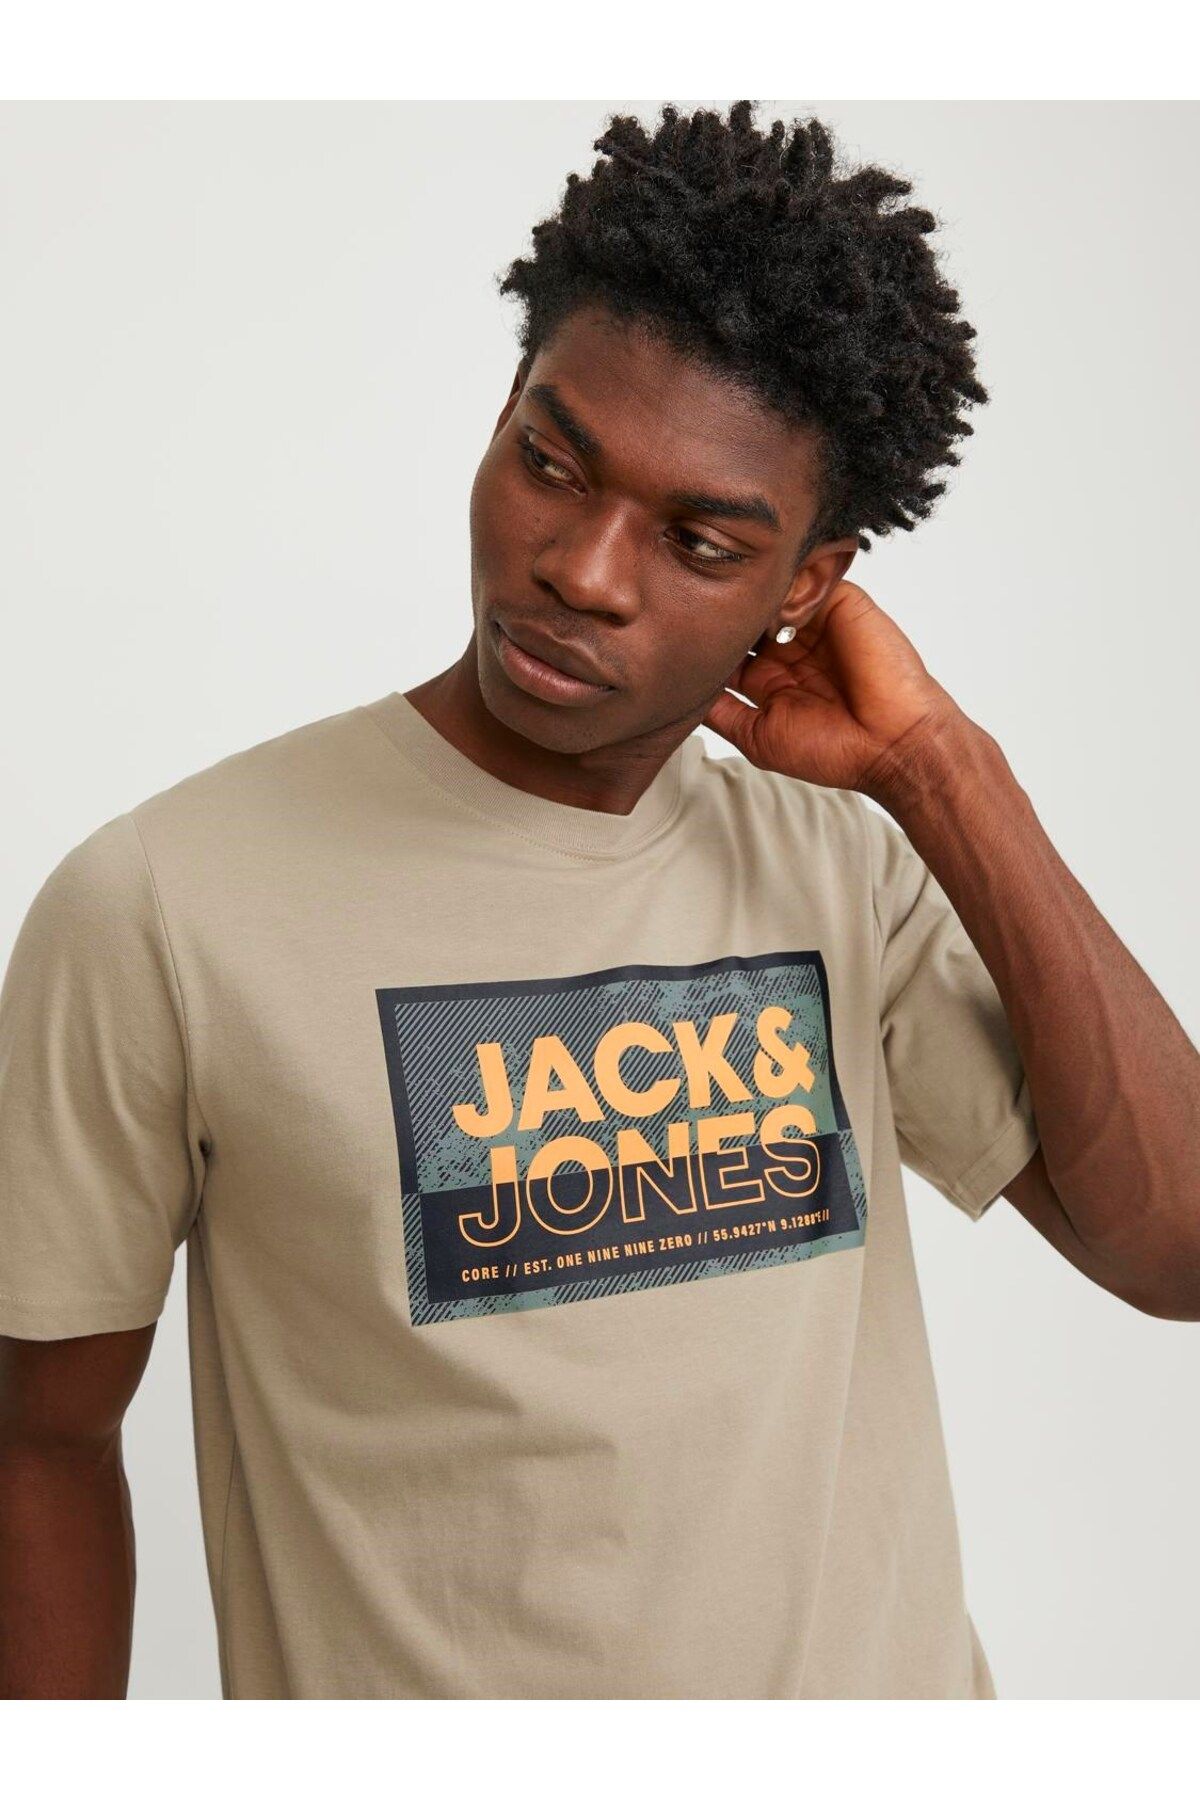 Jack & Jones Jack & Jones تی شرت مردانه بژ یقه O جک و جونز 100% نخ 12253442